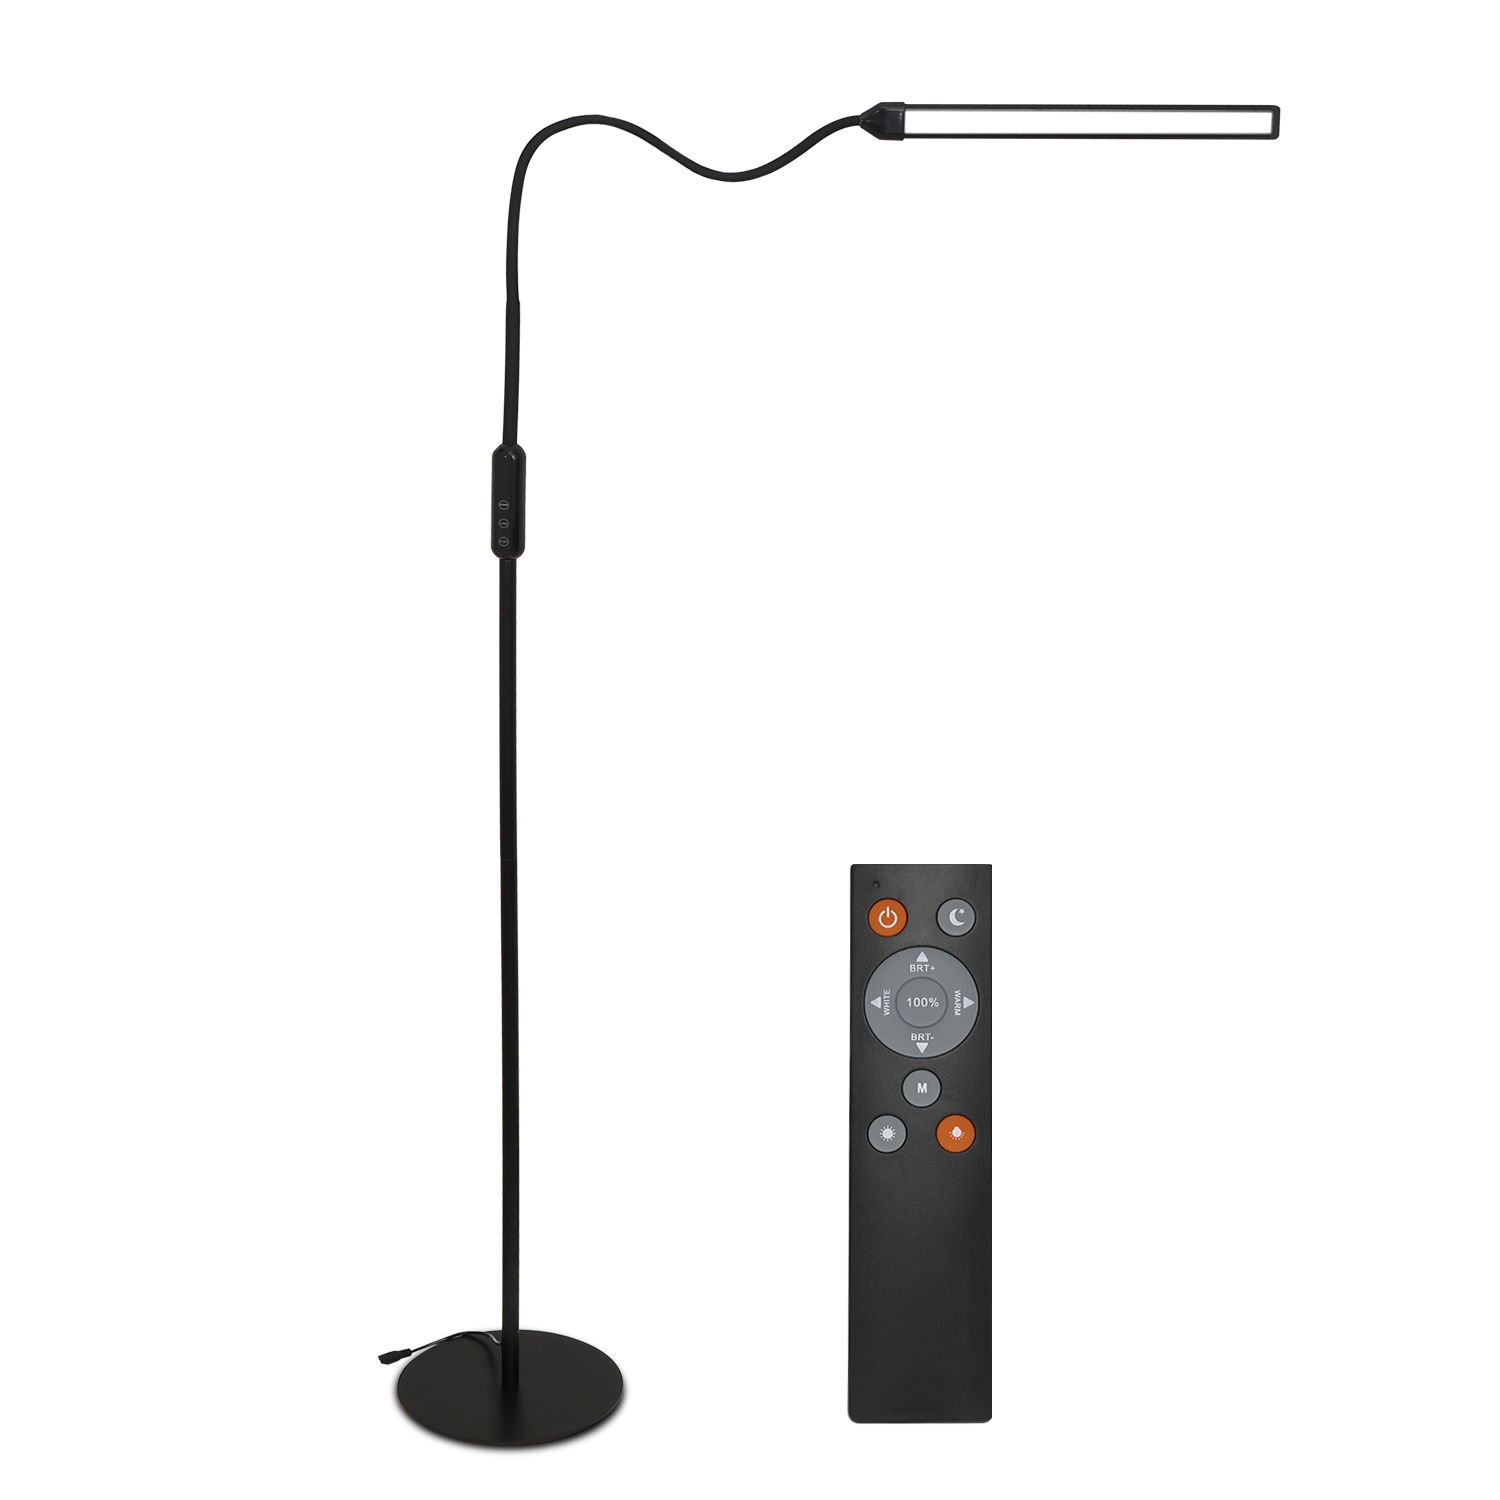 HG6887*1a Stehlampe ALIZENDEH LED Kaltweiß,Warmweiß,Neutralweiß LED / Stehleuchte